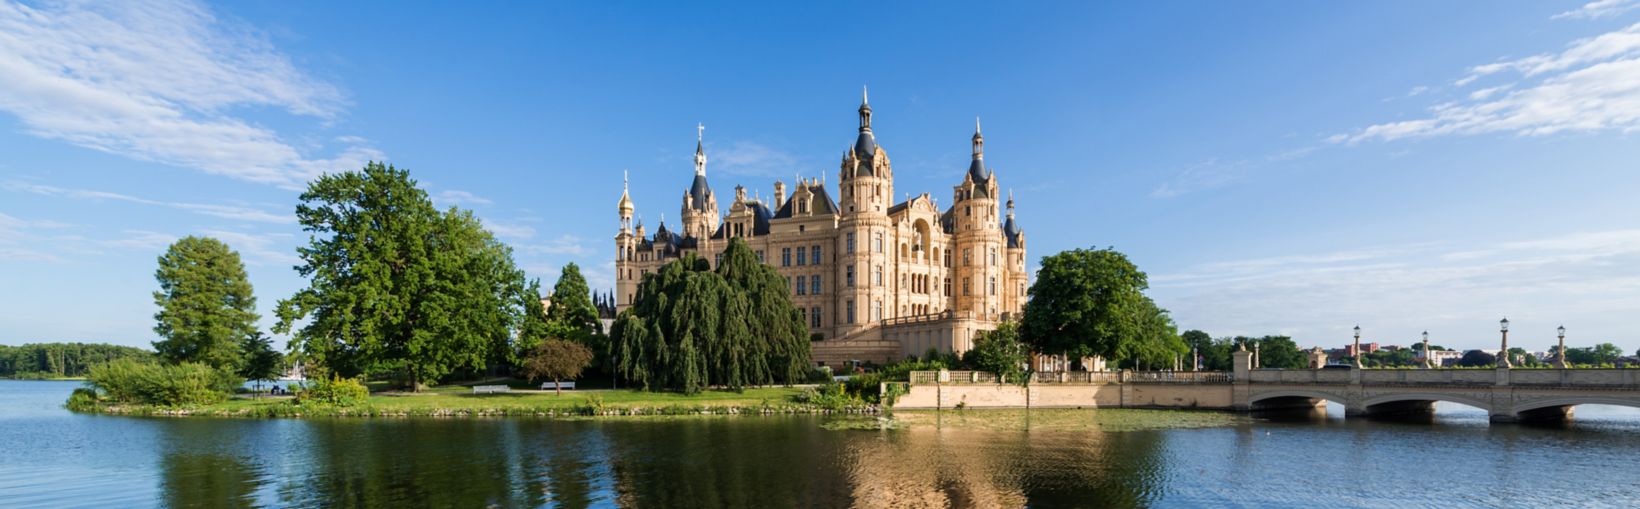 Castello di Schwerin, Schwerin, Germania